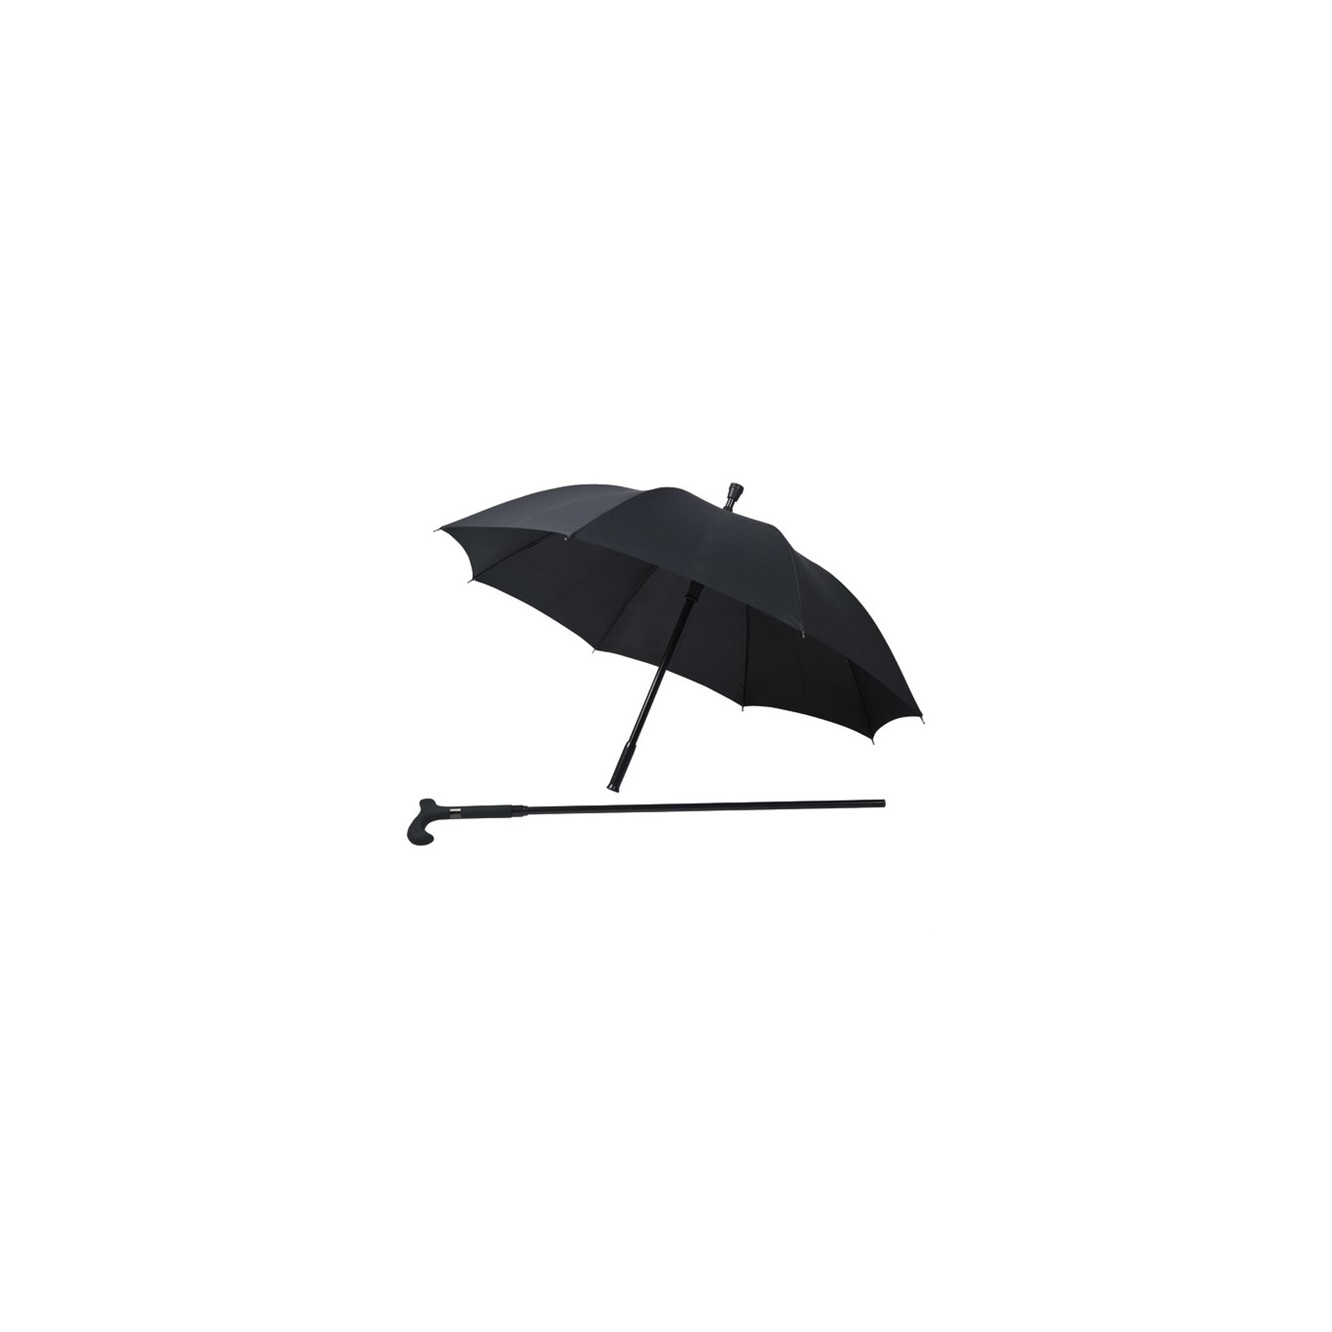 Falcone paraplu/wandelstok combinatie